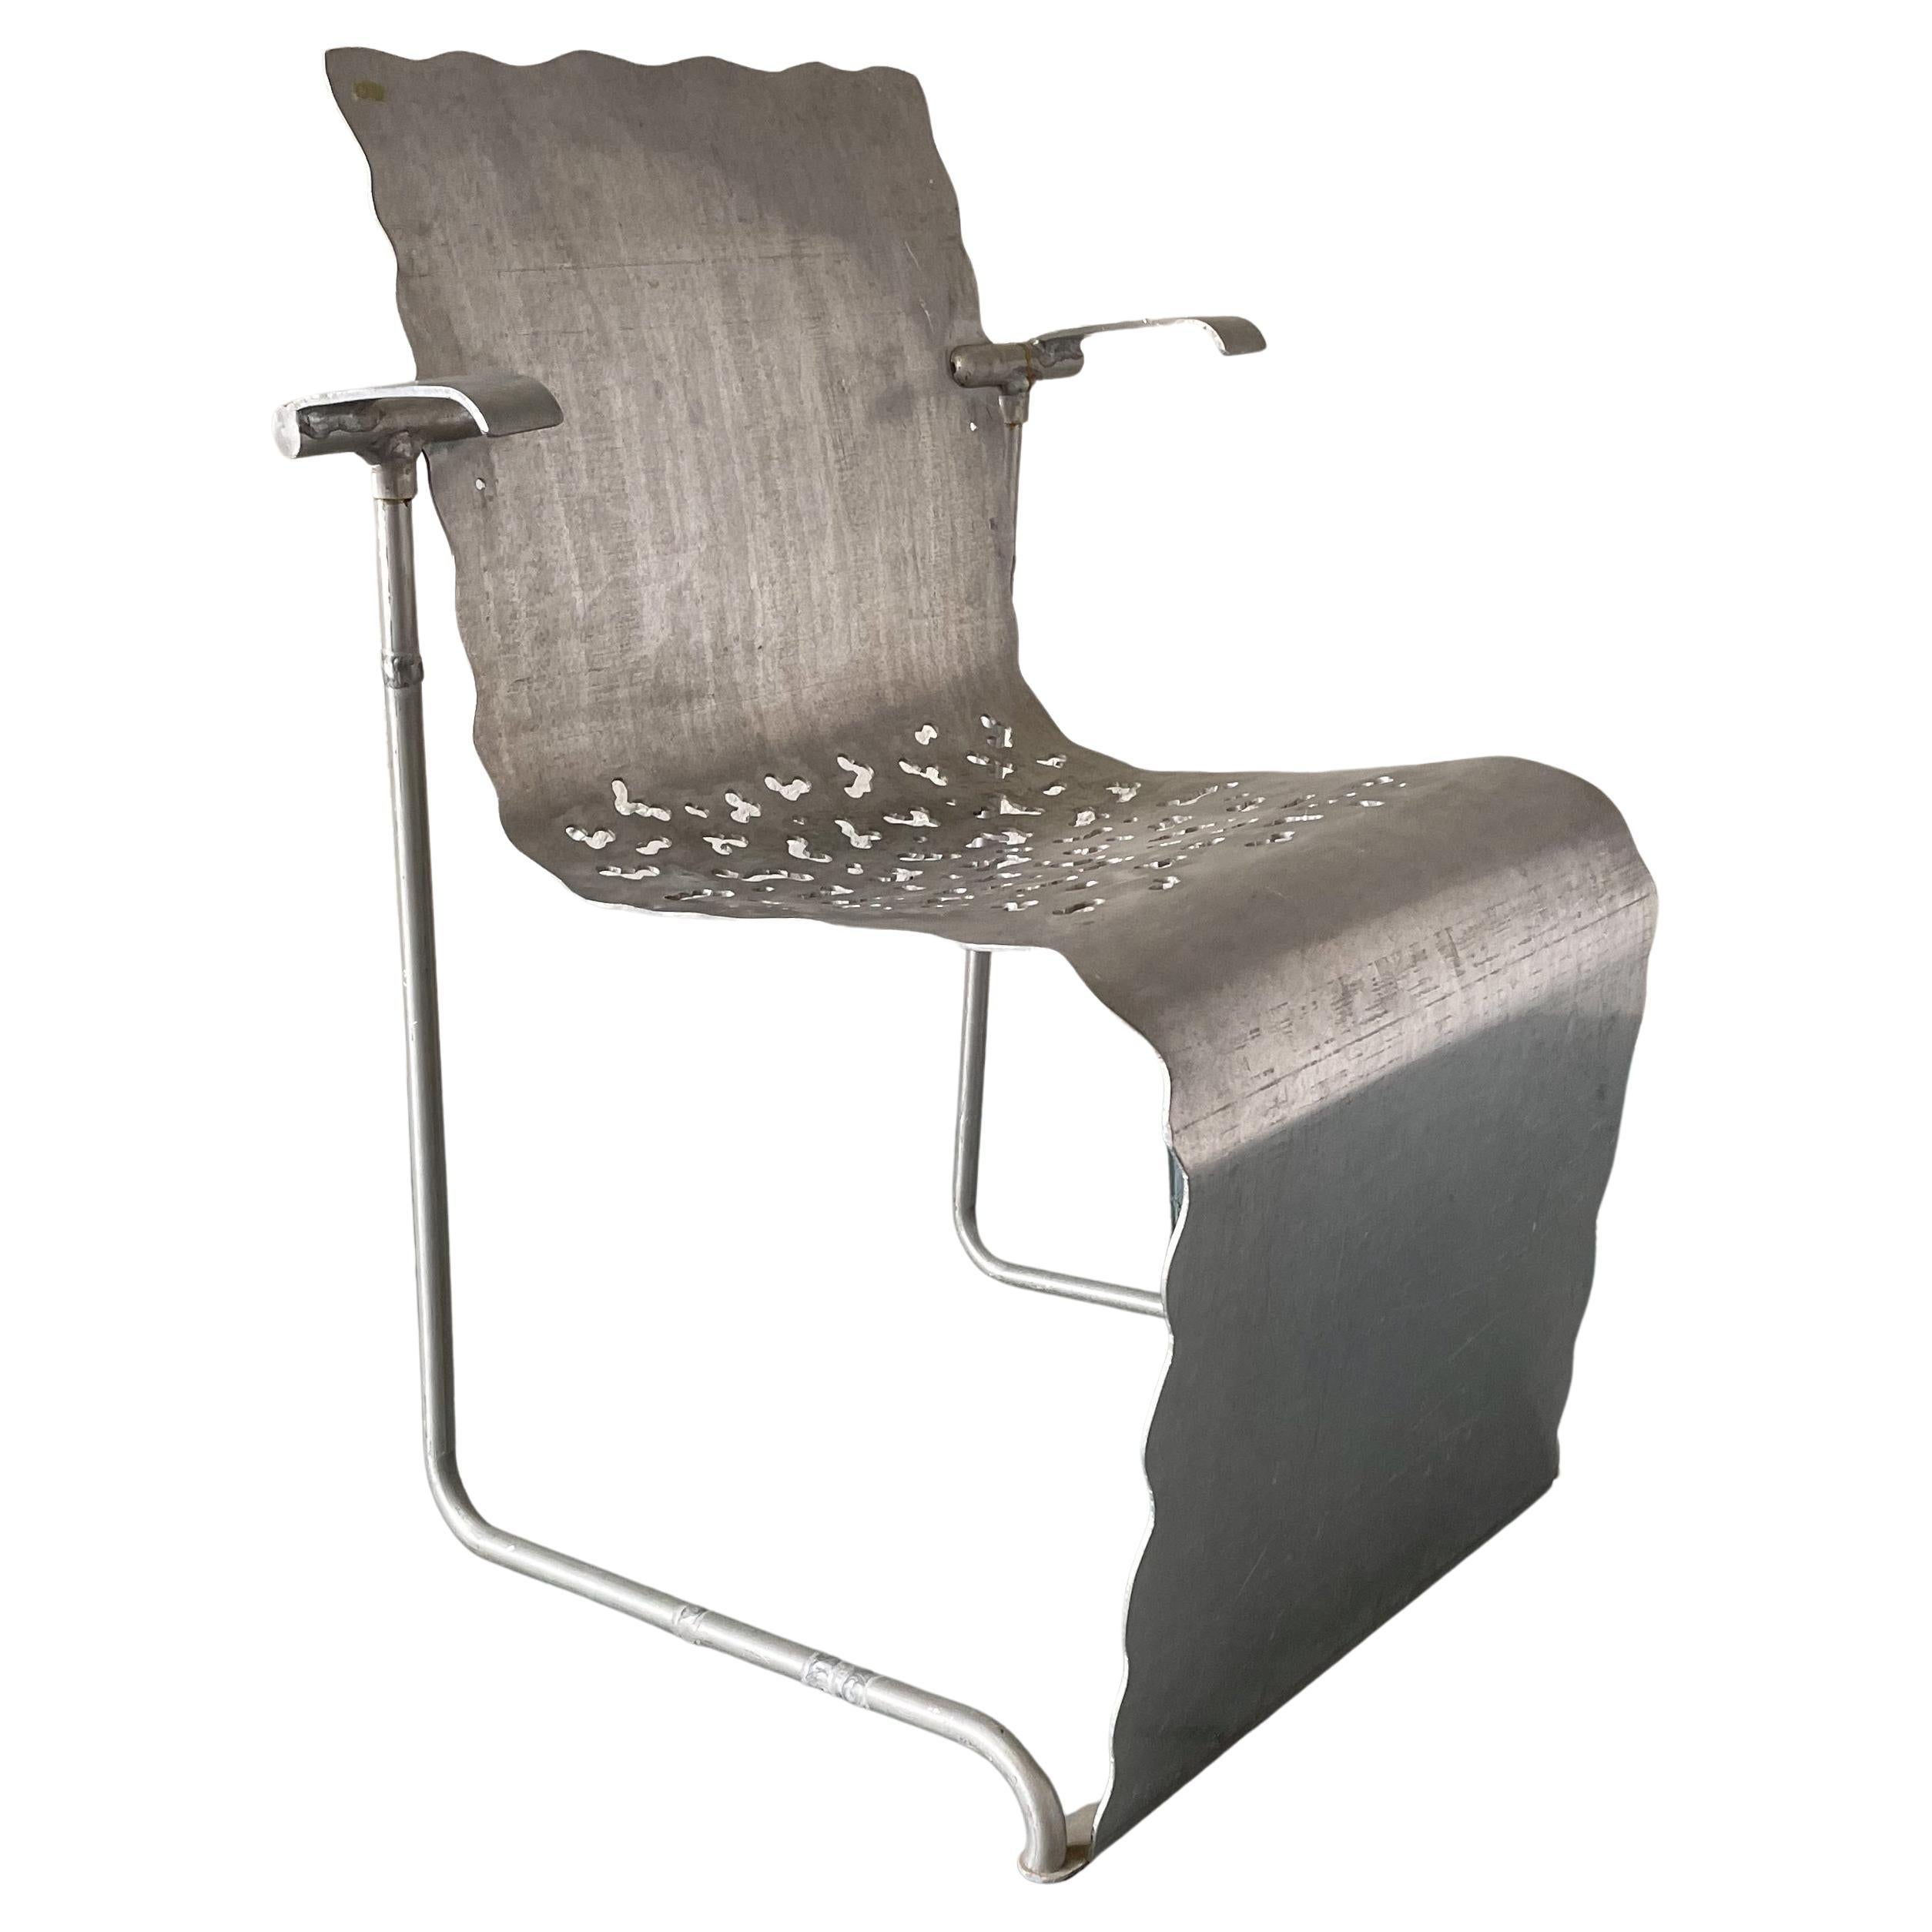 Richard Schultz Prototype Aluminum Stacking Chair #1